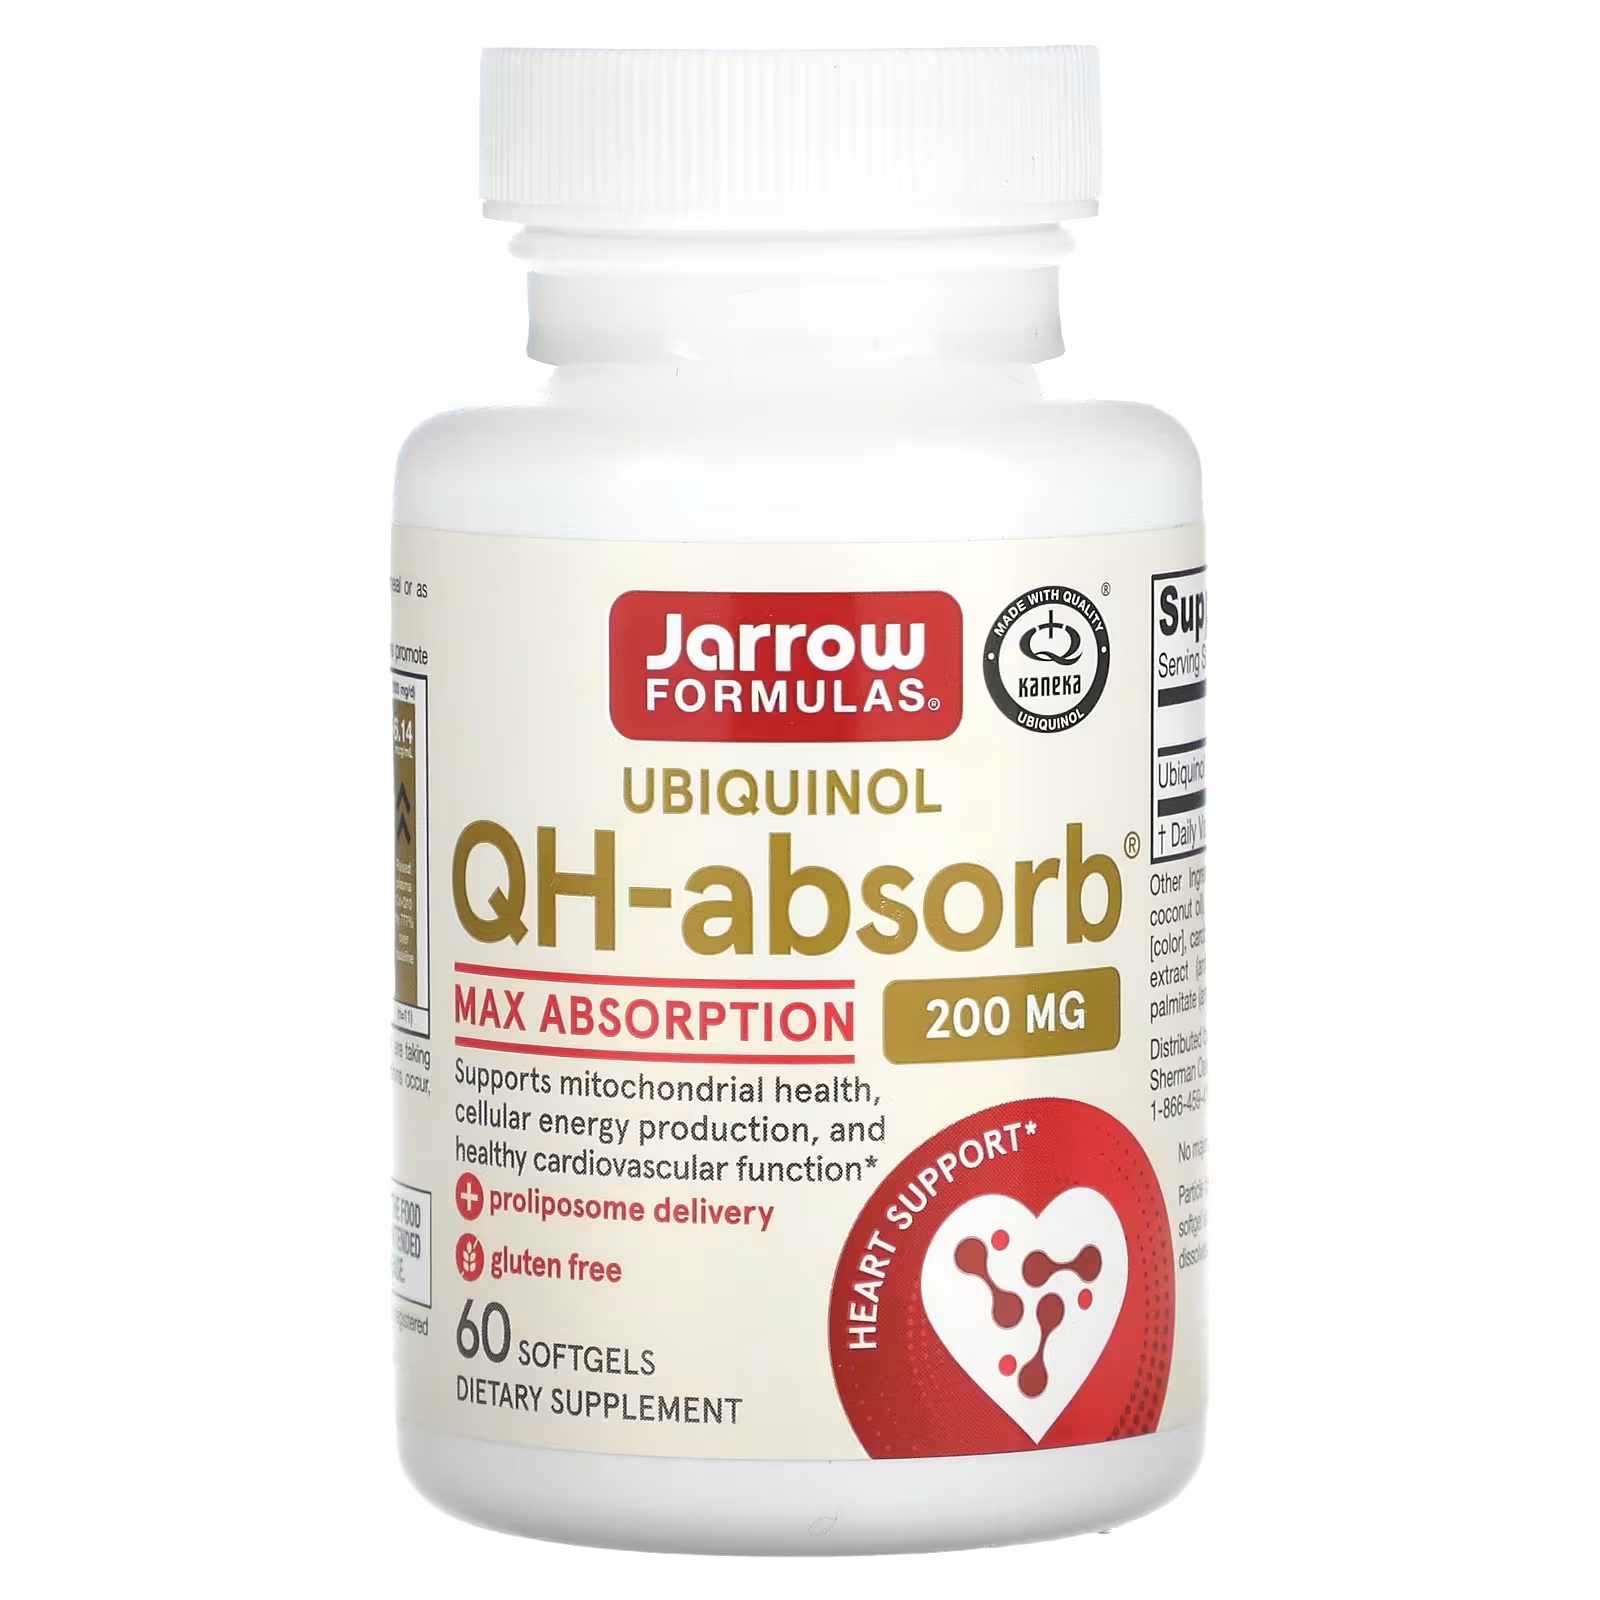 Jarrow Formulas Убихинол QH-Absorb Max Absorb 200 мг, 60 мягких таблеток qh absorb pqq 60 мягких таблеток jarrow formulas